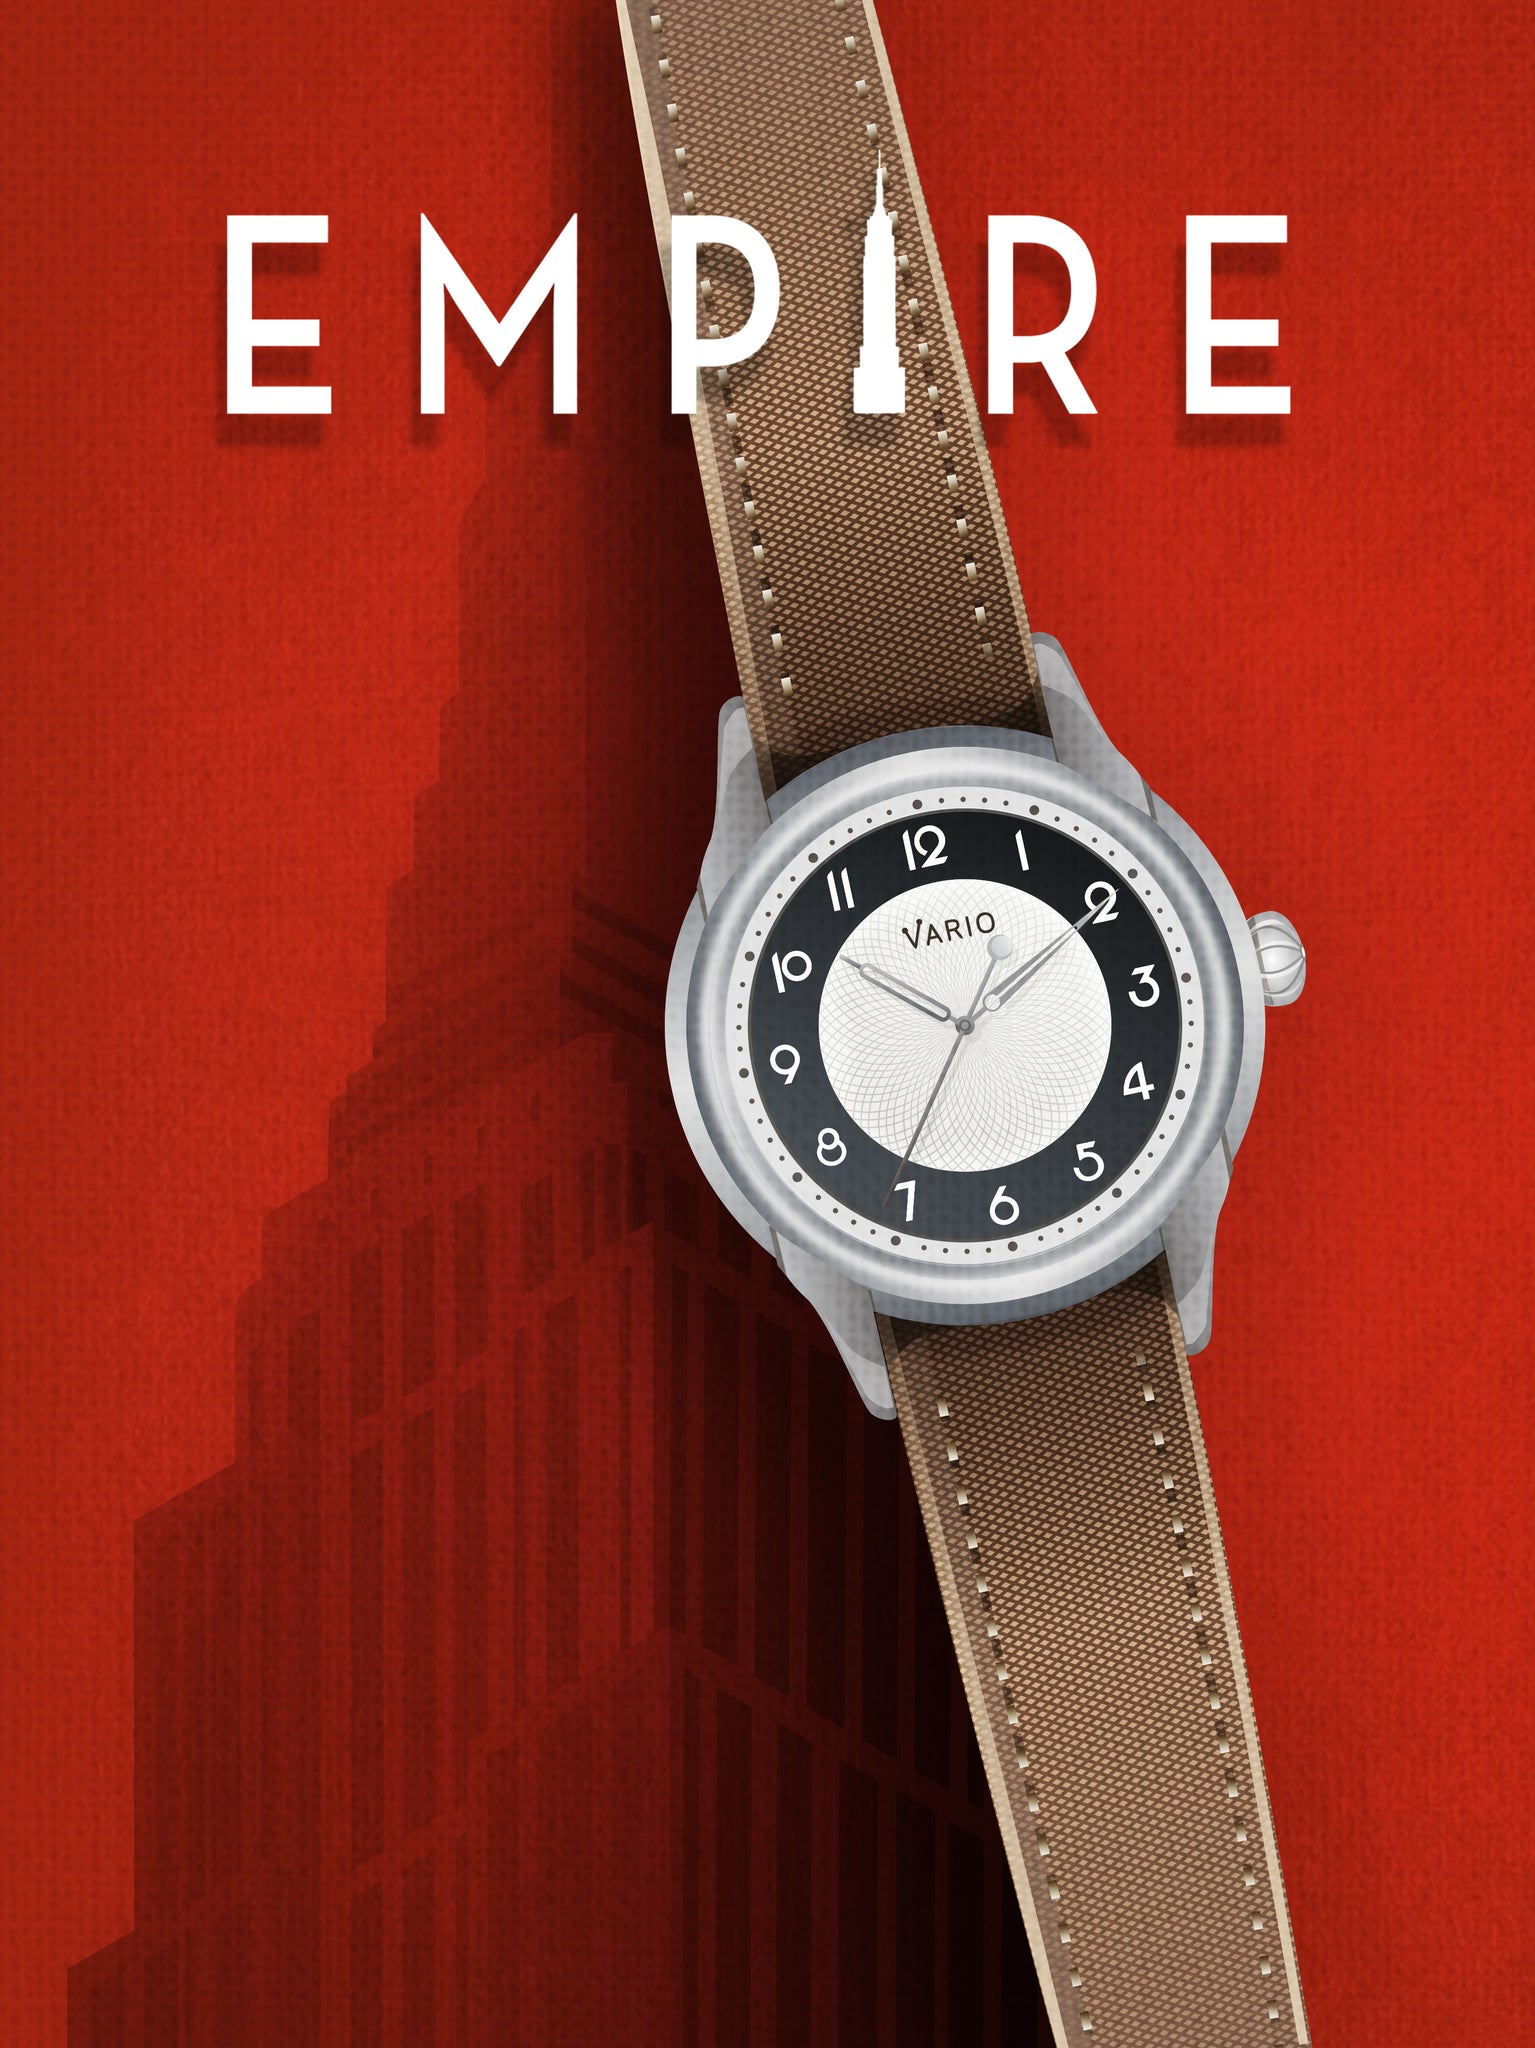 vario empire poster